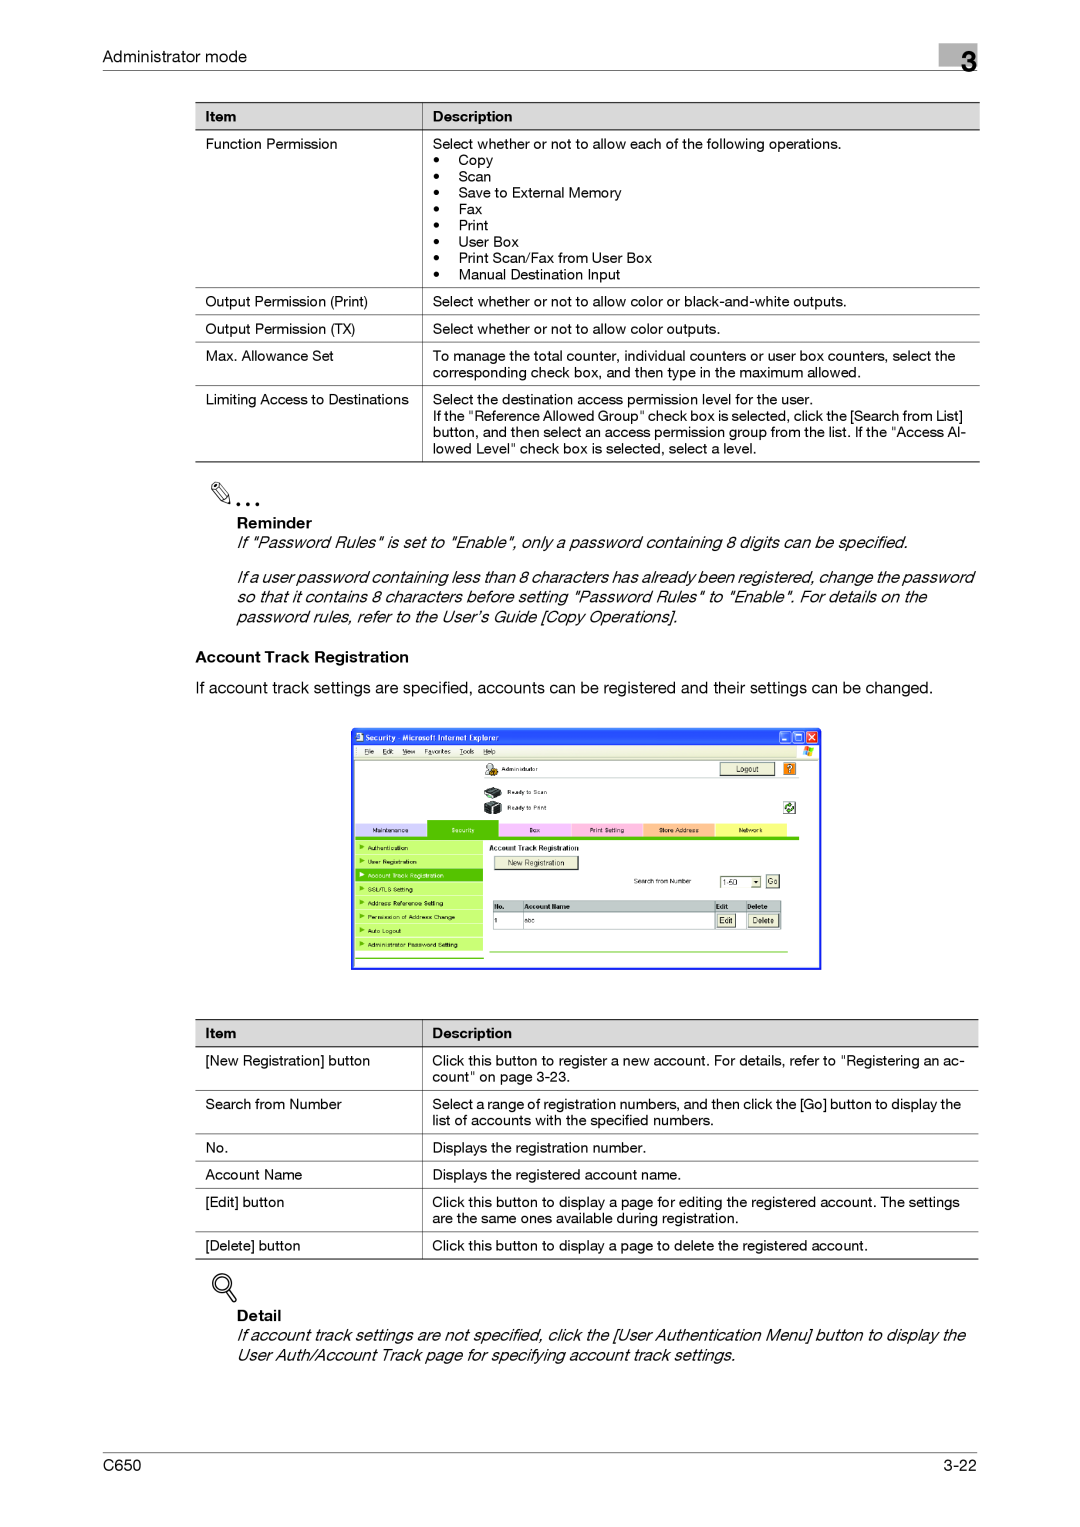 Konica Minolta C650 manual Administrator mode, Reminder, Account Track Registration, Detail, 3-22 